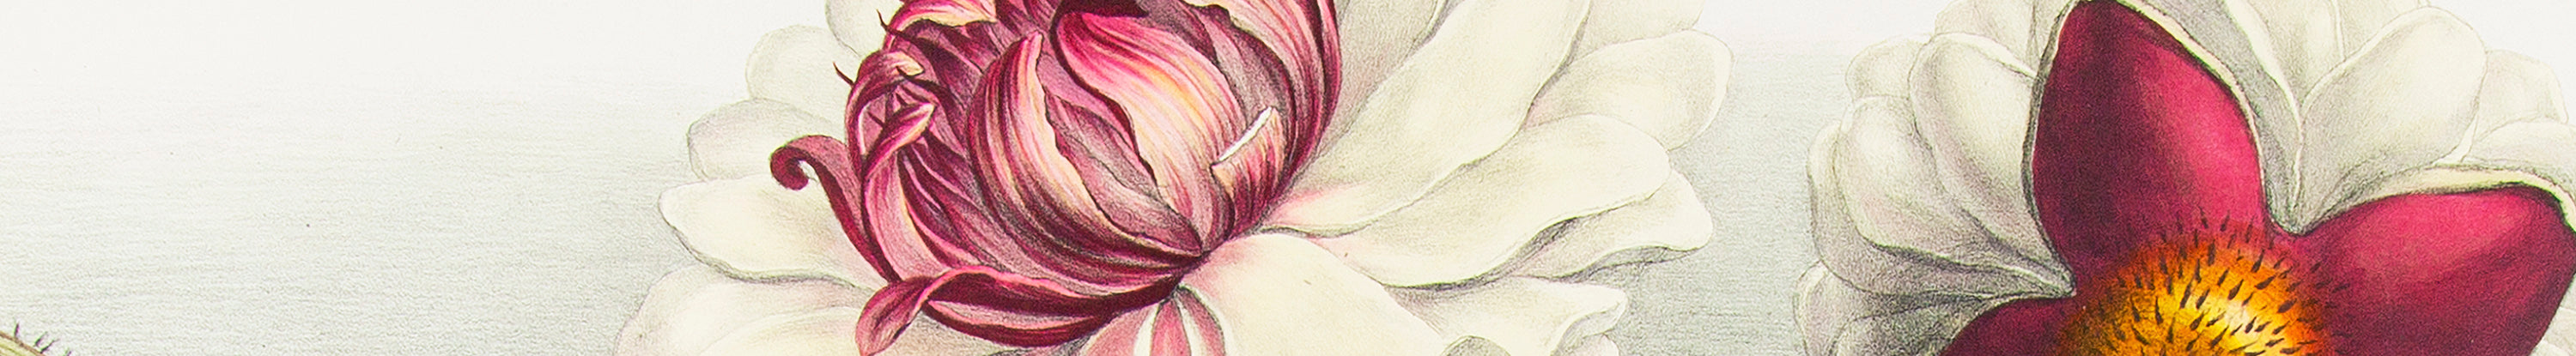 Botanical illustration of pink and white flowers